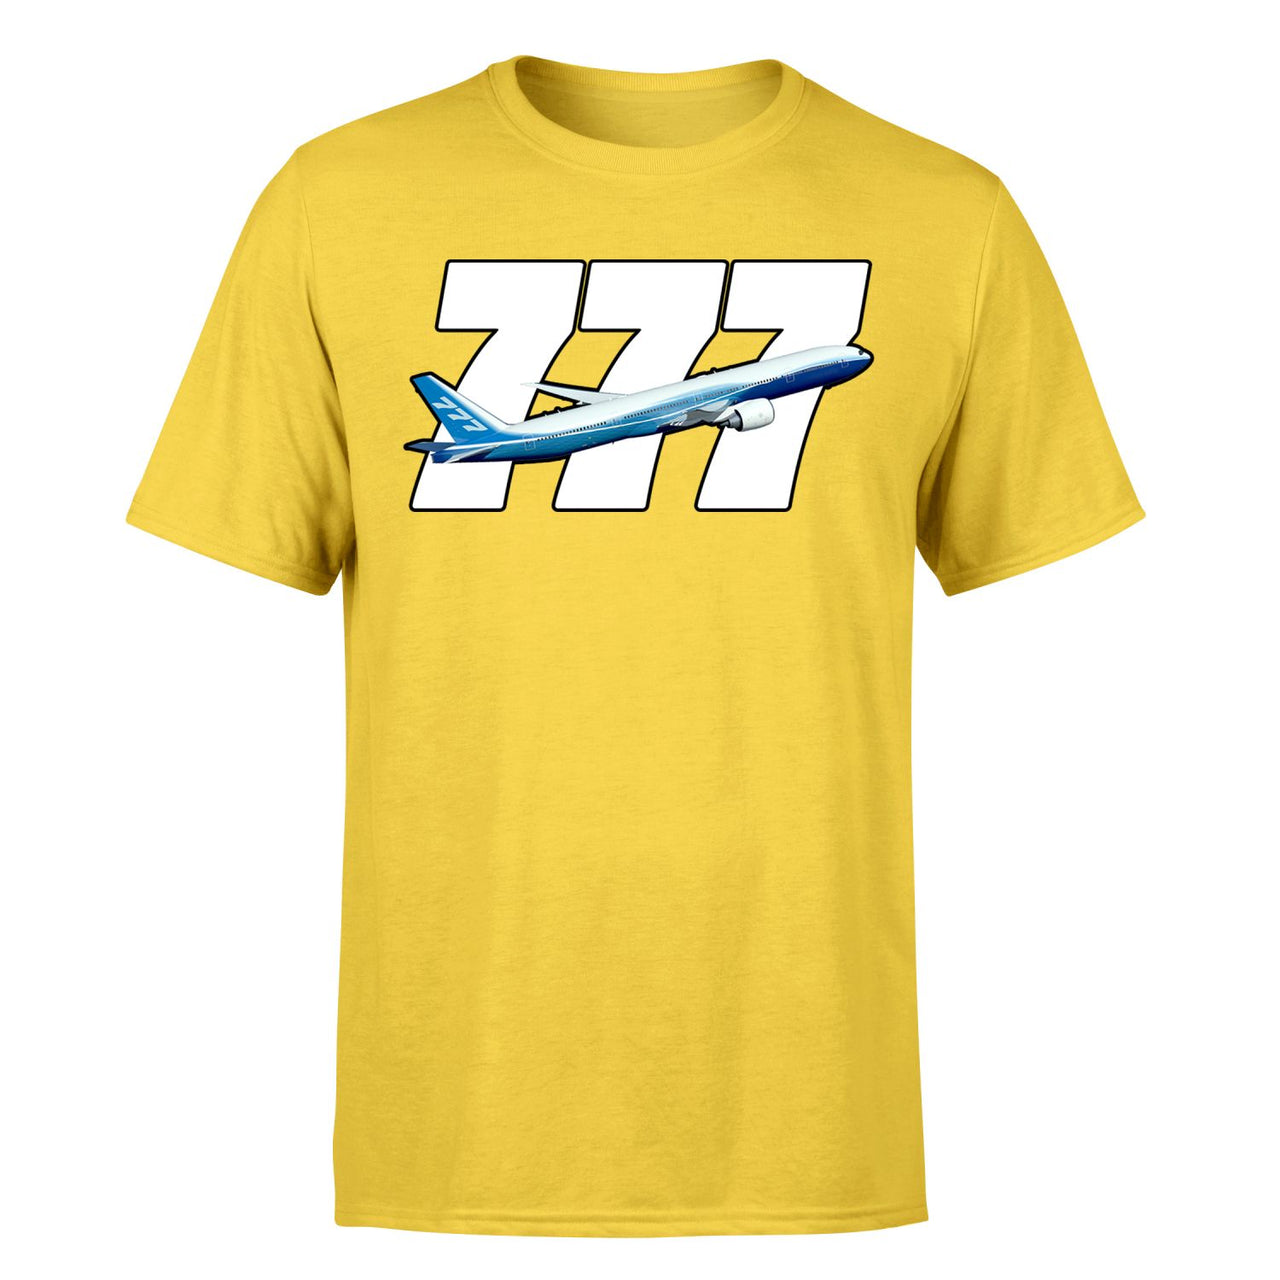 Super Boeing 777 Designed T-Shirts